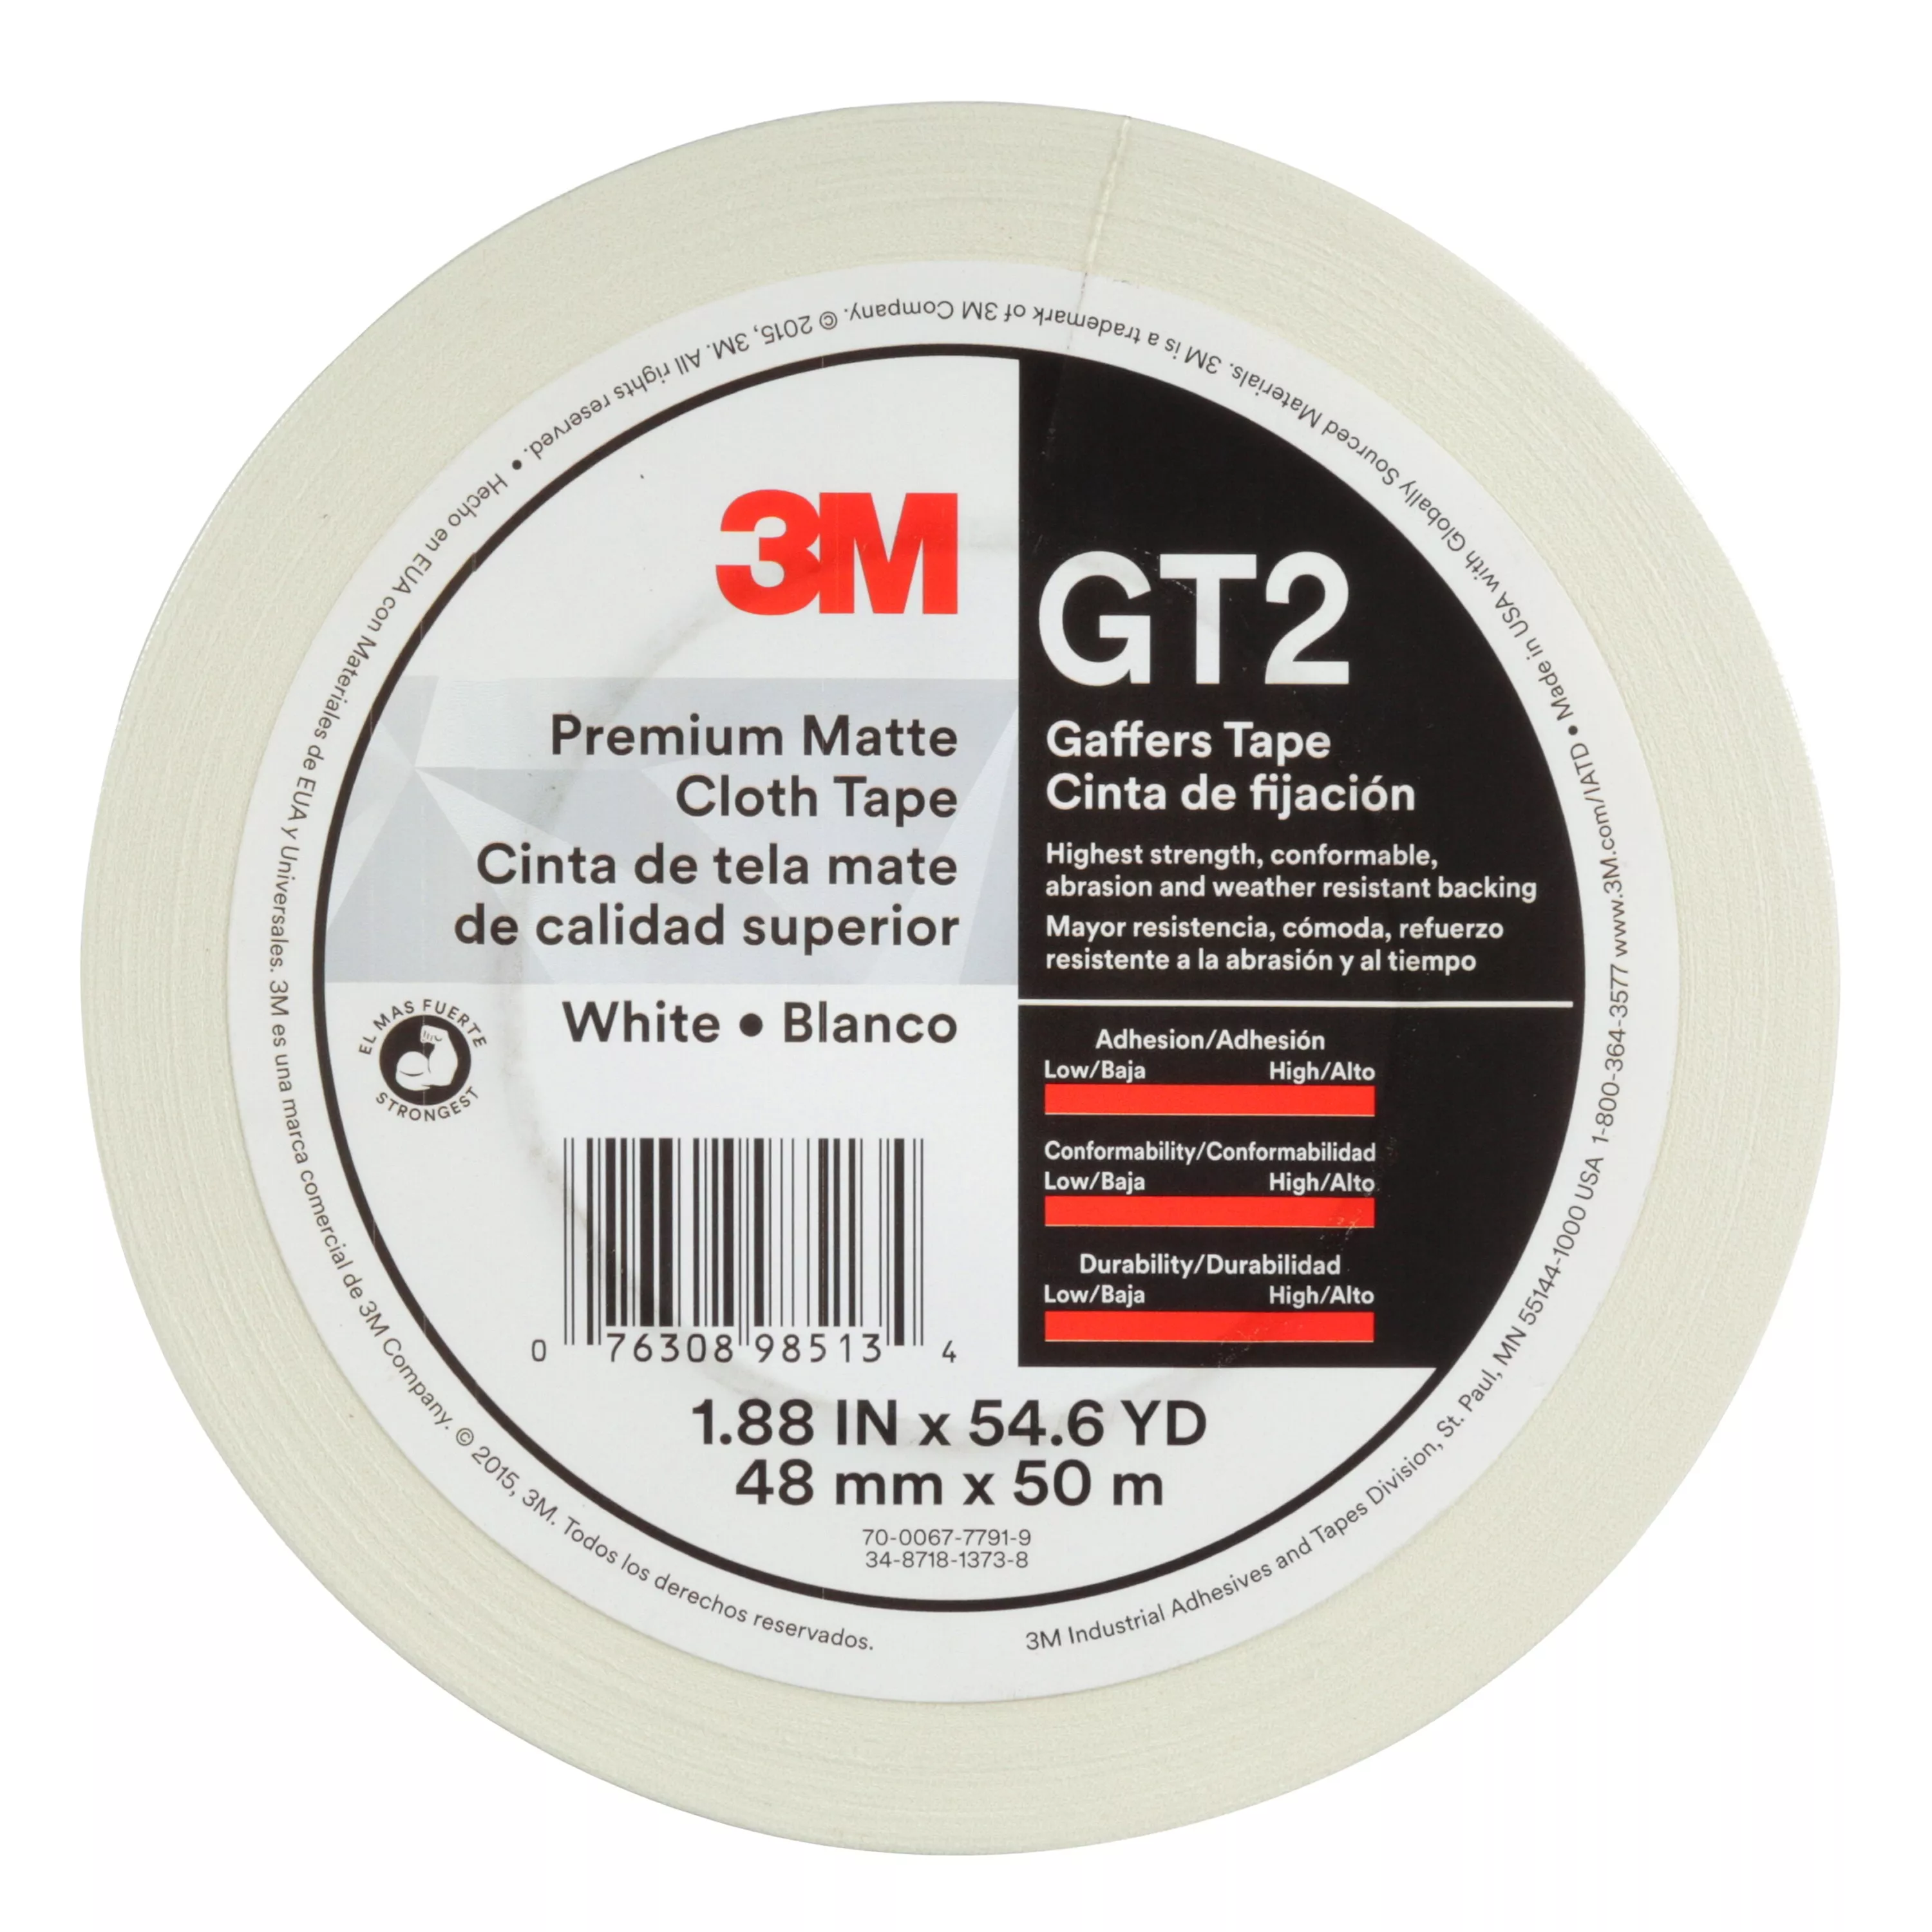 UPC 00076308985134 | 3M™ Premium Matte Cloth (Gaffers) Tape GT2